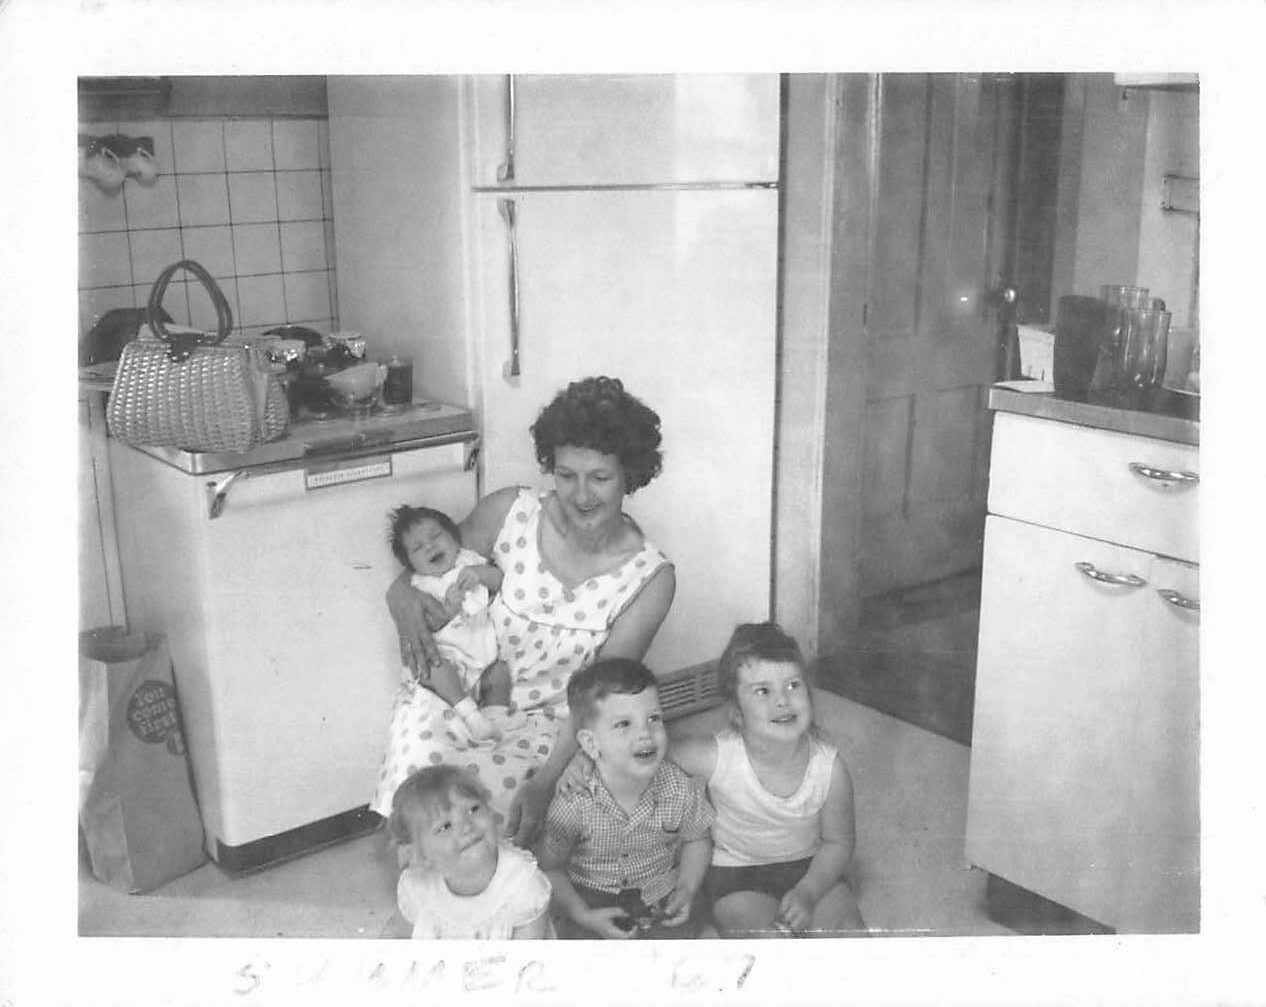 me, my grandmother Bridget, sister Amy, cousin Lee, sister Kelly